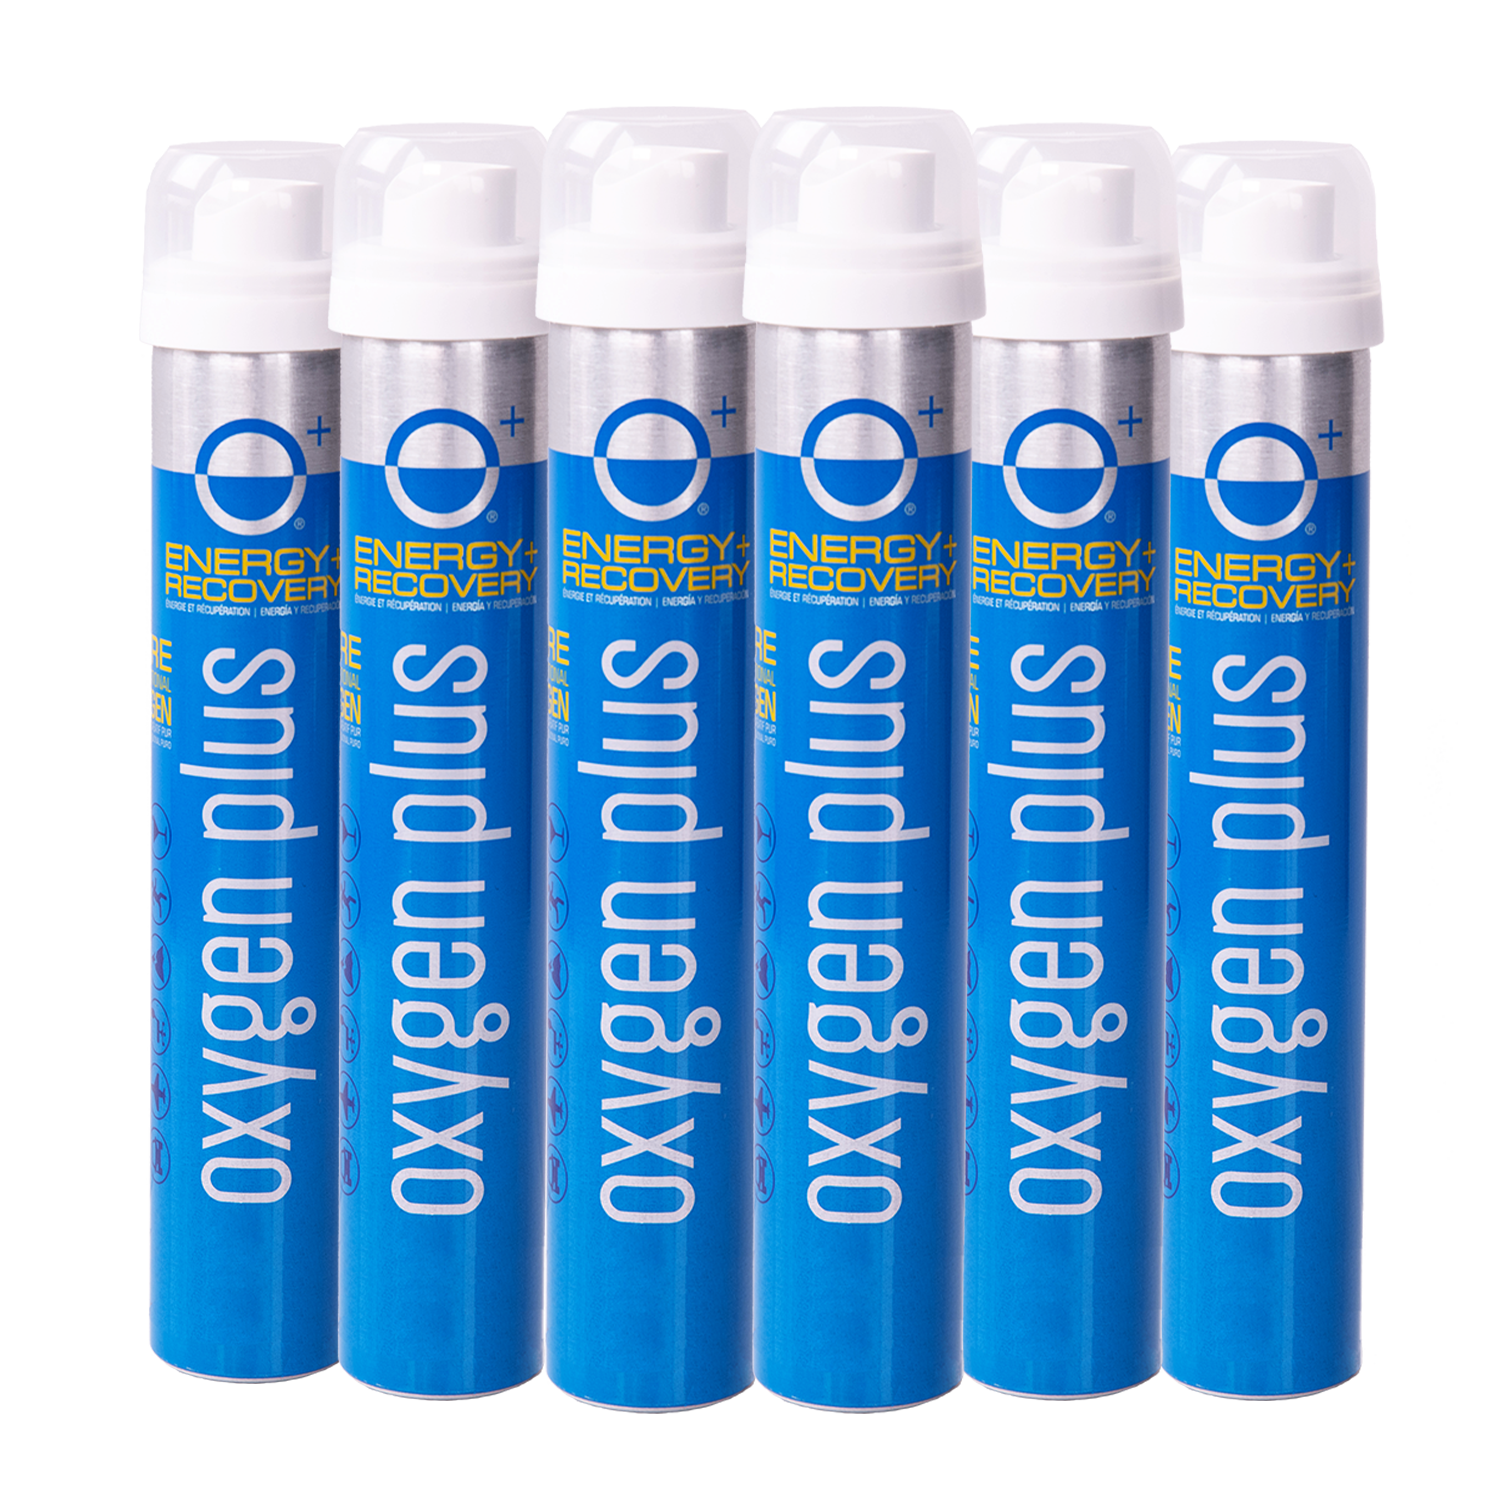 O+ canned oxygen skinni 6-pack